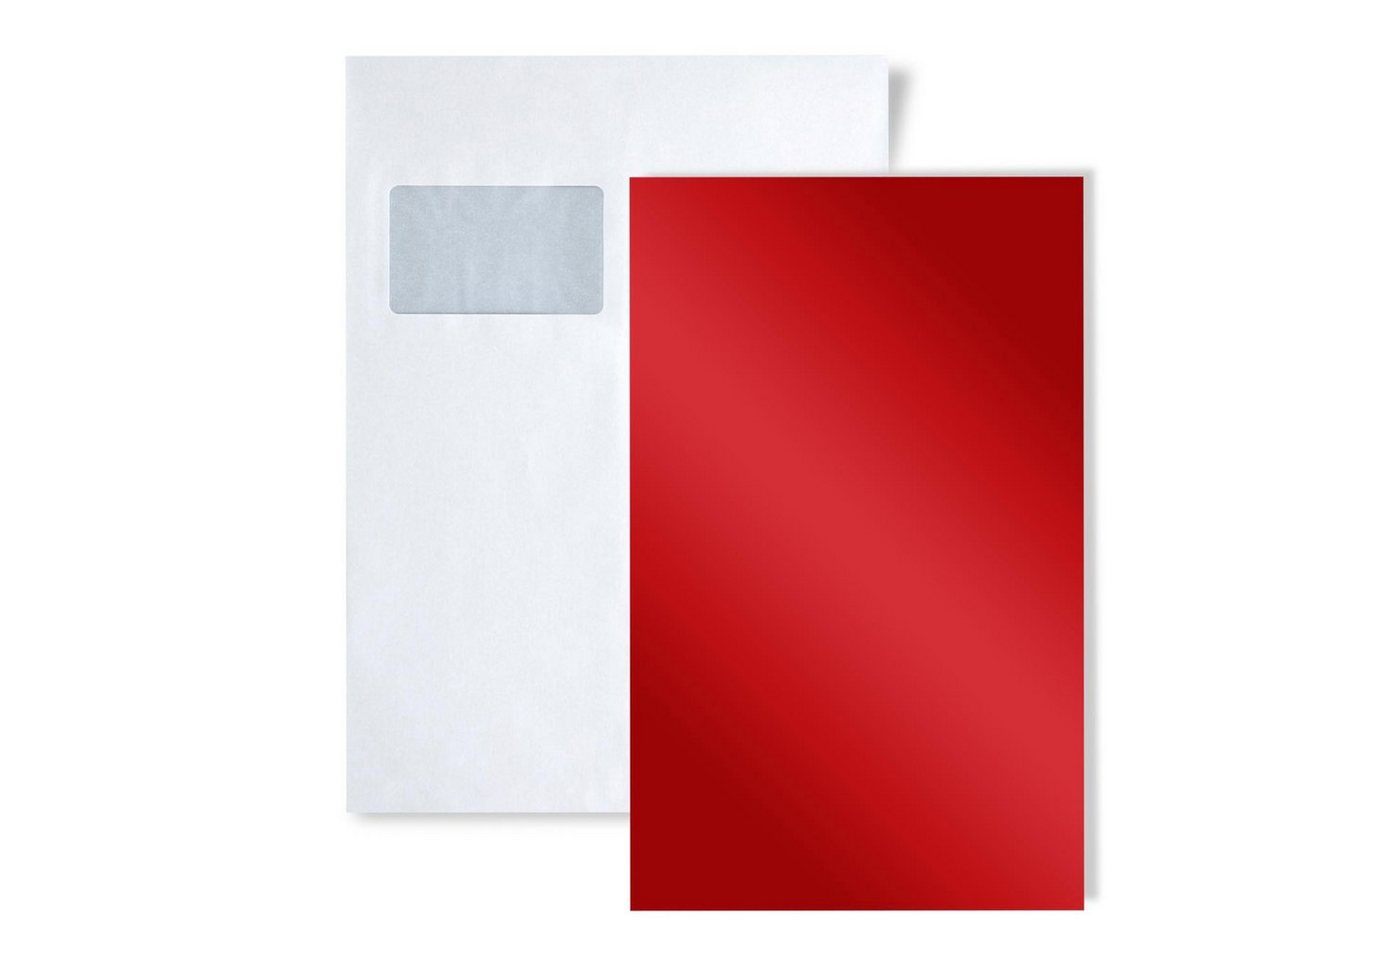 Wallface Wandpaneel S-23388-SA, BxL: 15x20 cm, (1 MUSTERSTÜCK, Produktmuster, Muster des Wandpaneels) rot von Wallface